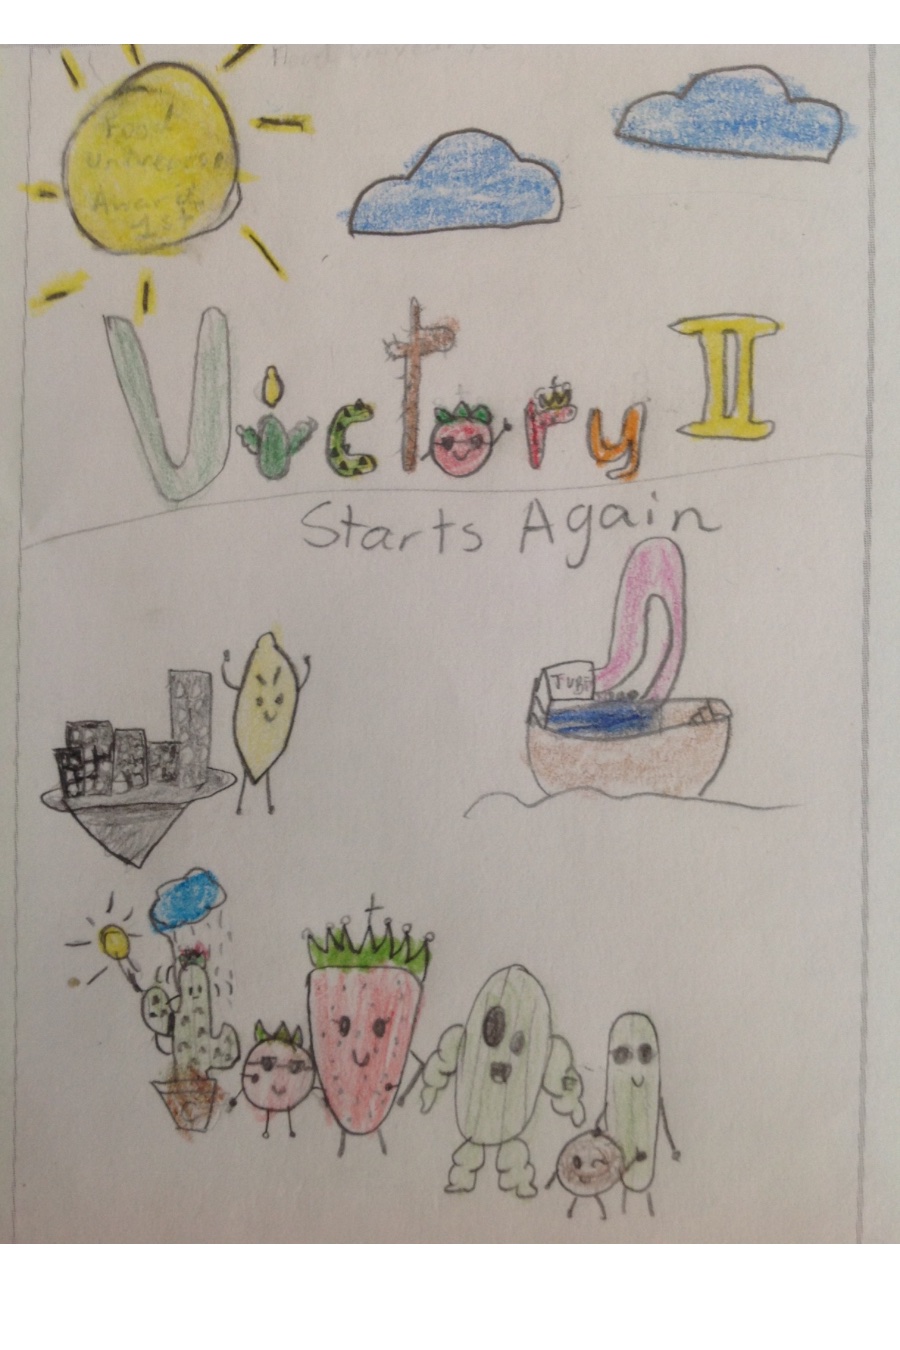 Victory II: Starts Again by Clara S